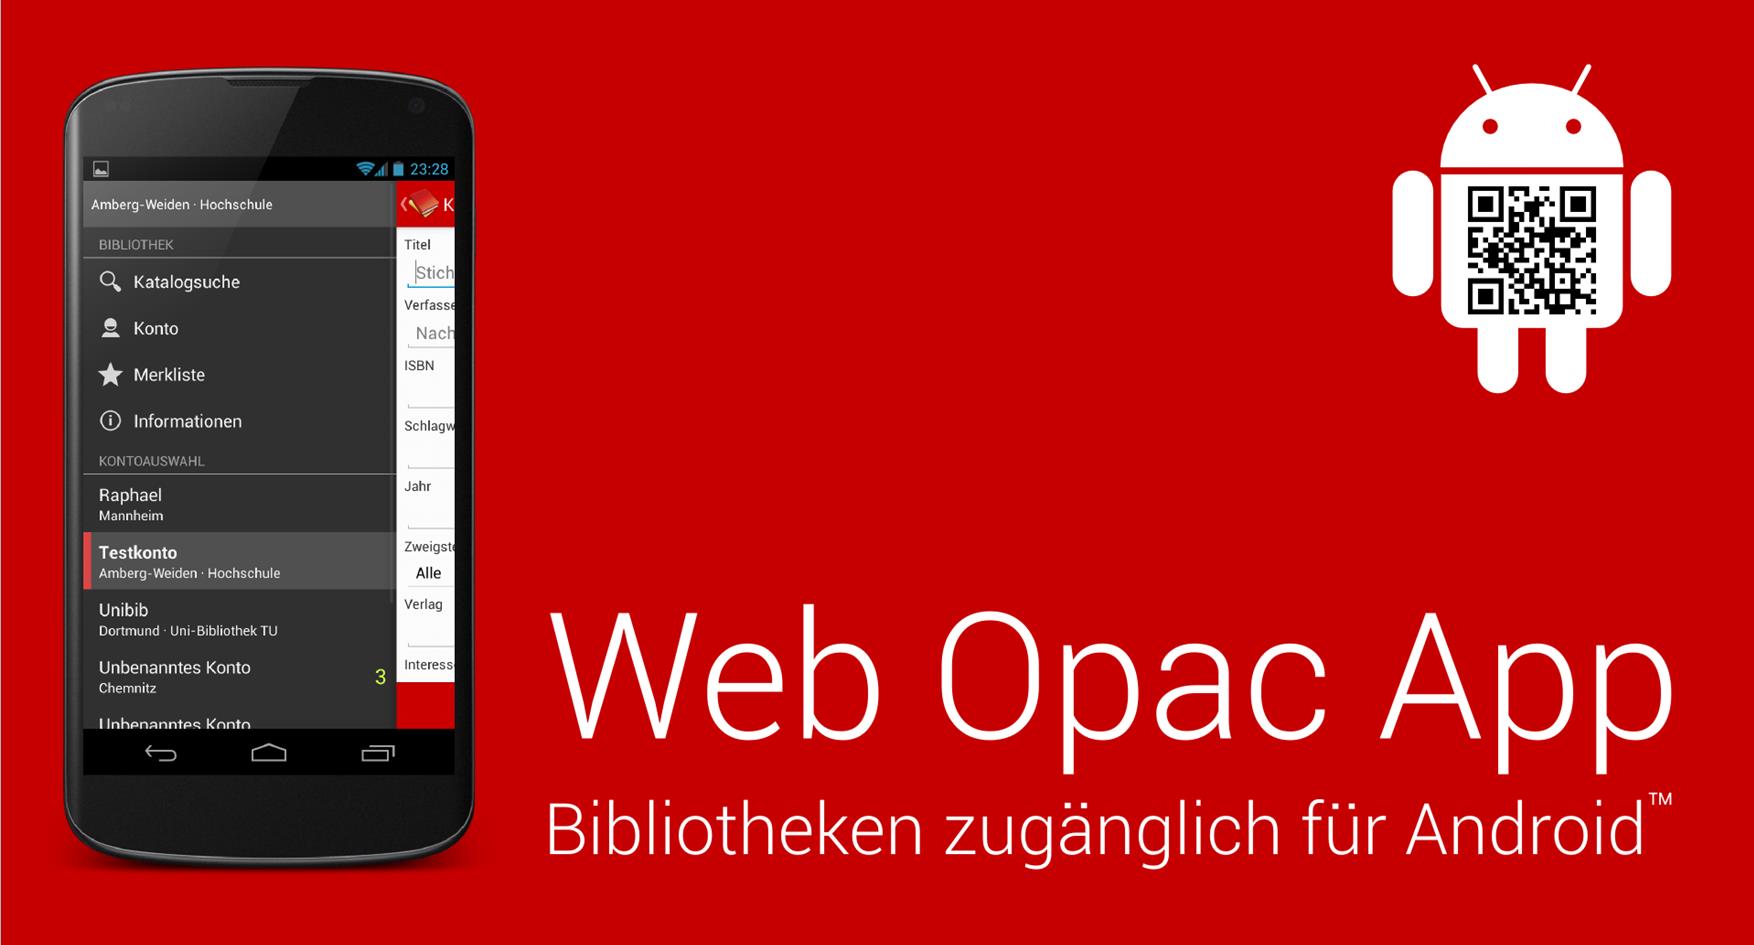 WebOPAC App